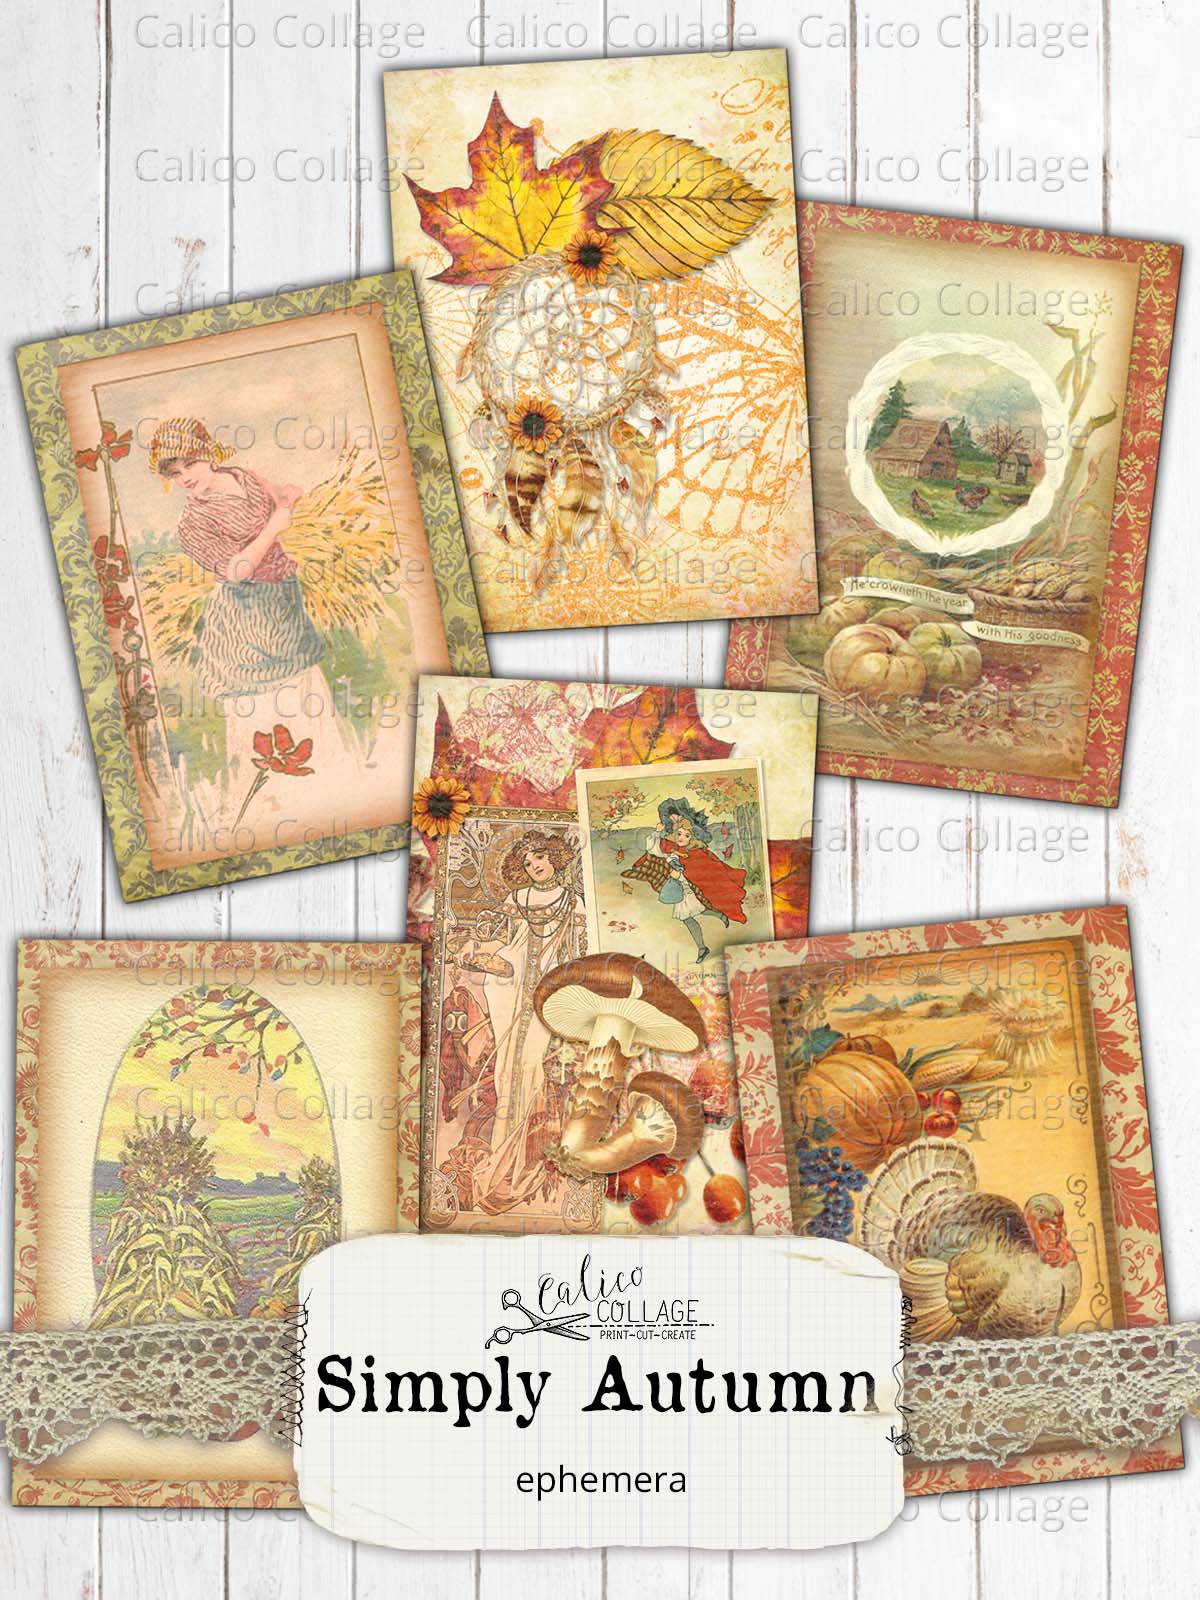 Autumn Ephemera, Junk Journal Supplies, Ephemera Pack, Vintage Fall, Journal  Cards, Tags, Fall Ephemera, Calicocollage, Simply Autumn 